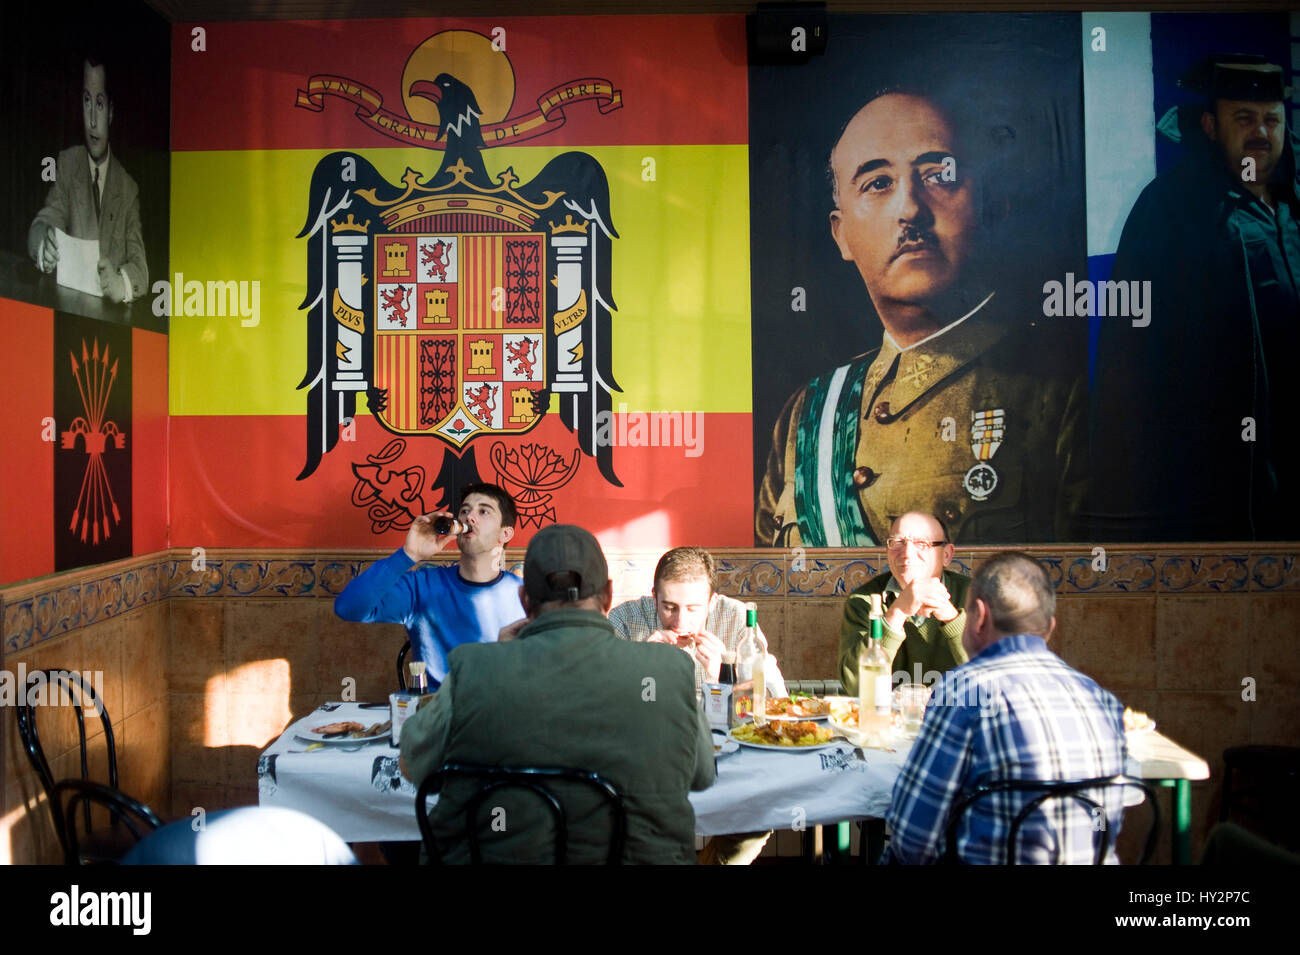 El Cangrejo bar restaurant in La Solana, Ciudad Real, Spain, pays homage to Spanish dictator Francisco Franco. Stock Photo